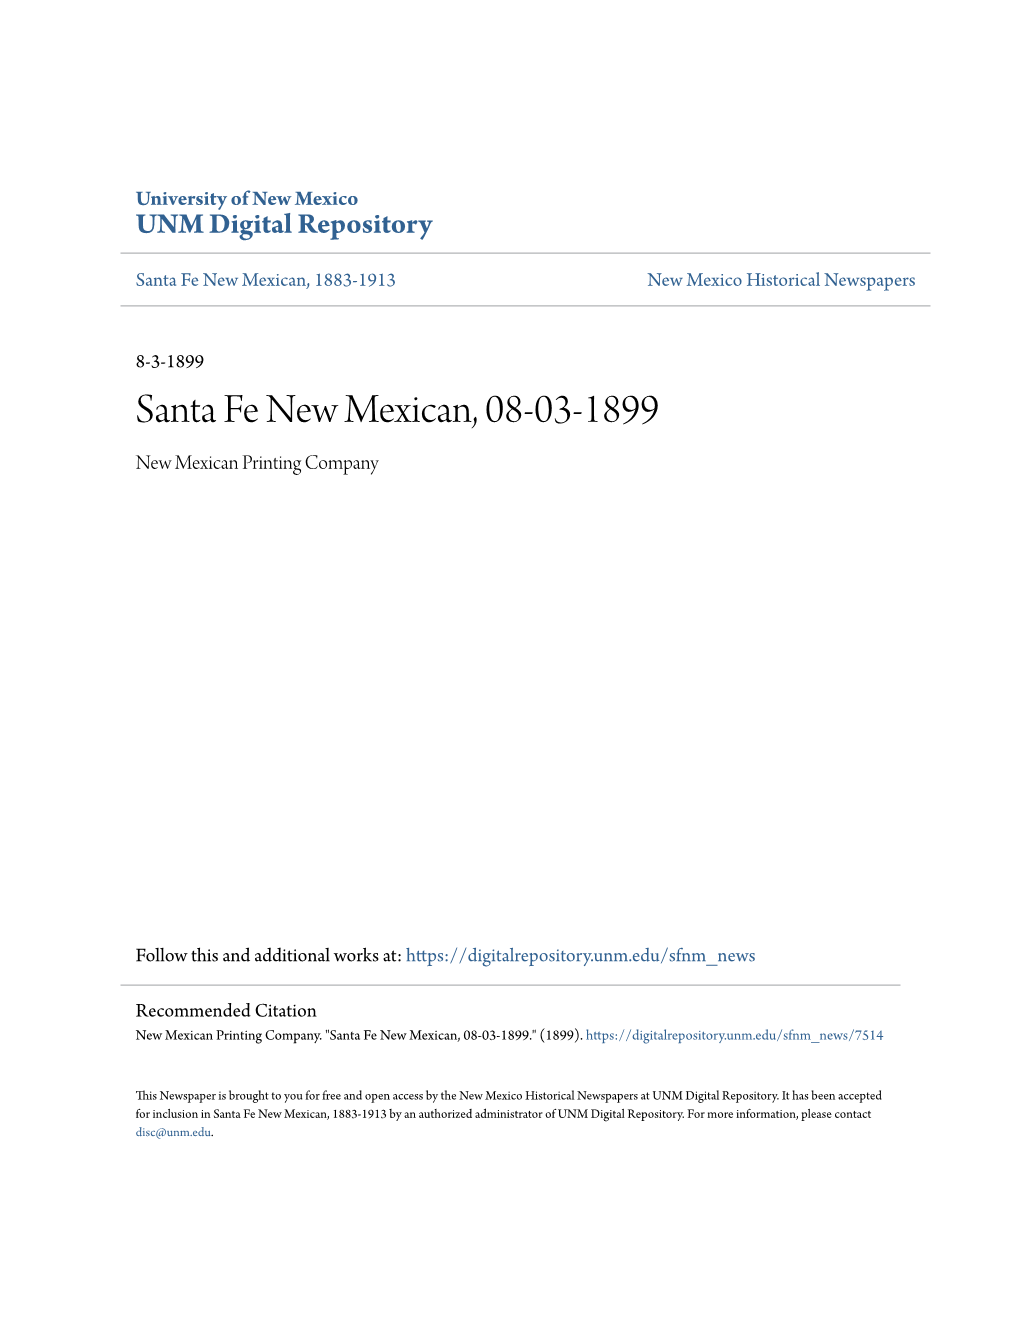 Santa Fe New Mexican, 08-03-1899 New Mexican Printing Company